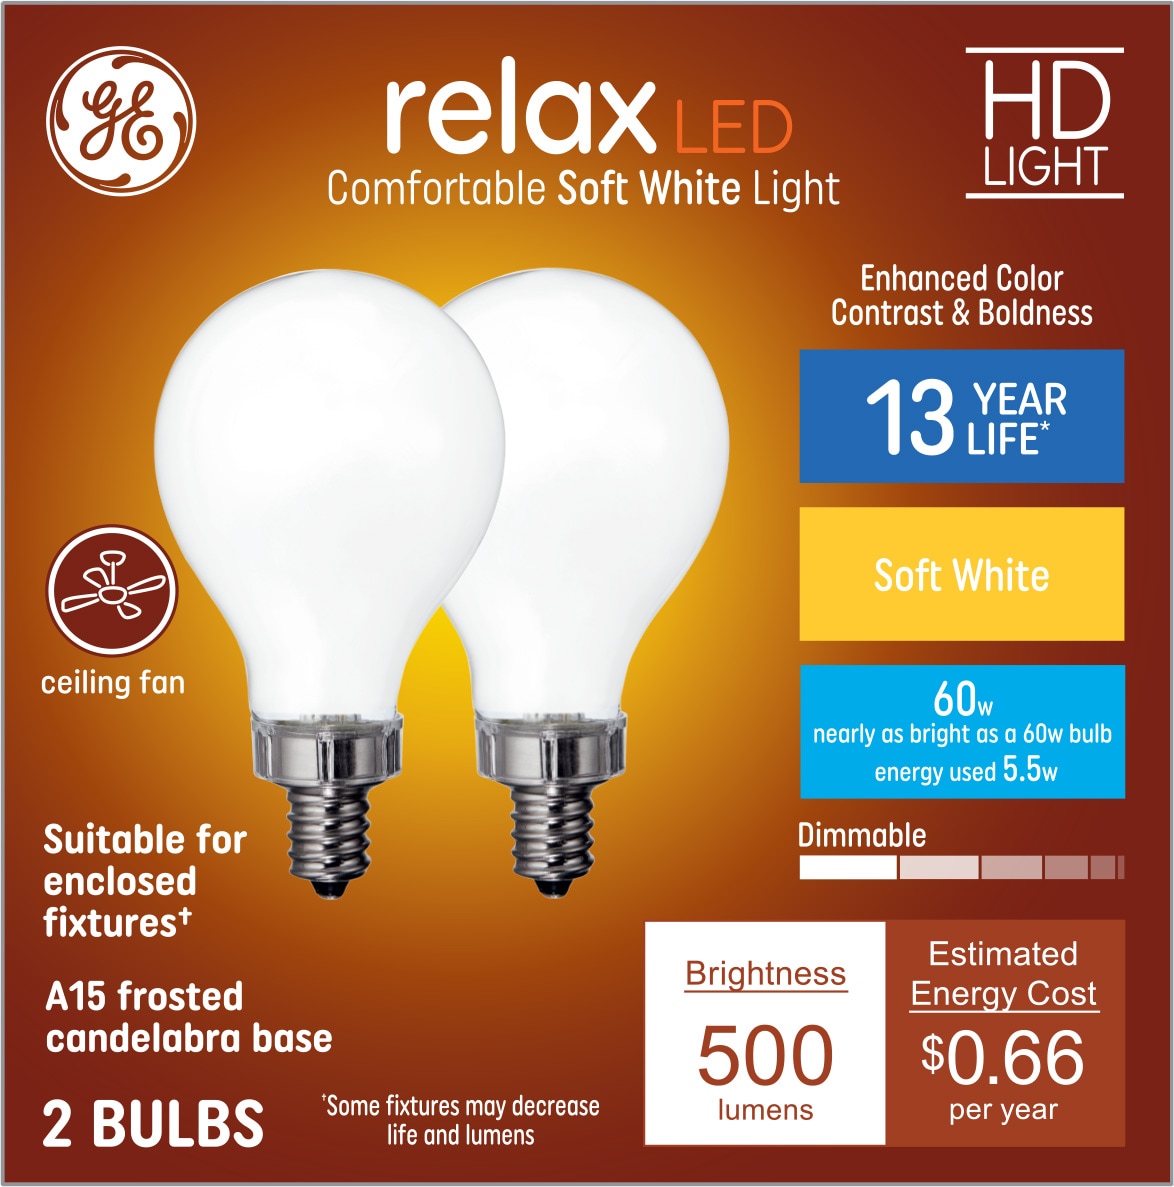 Philips LED 60 Watt Equivalent A19 Soft White Light Bulb 2pk 